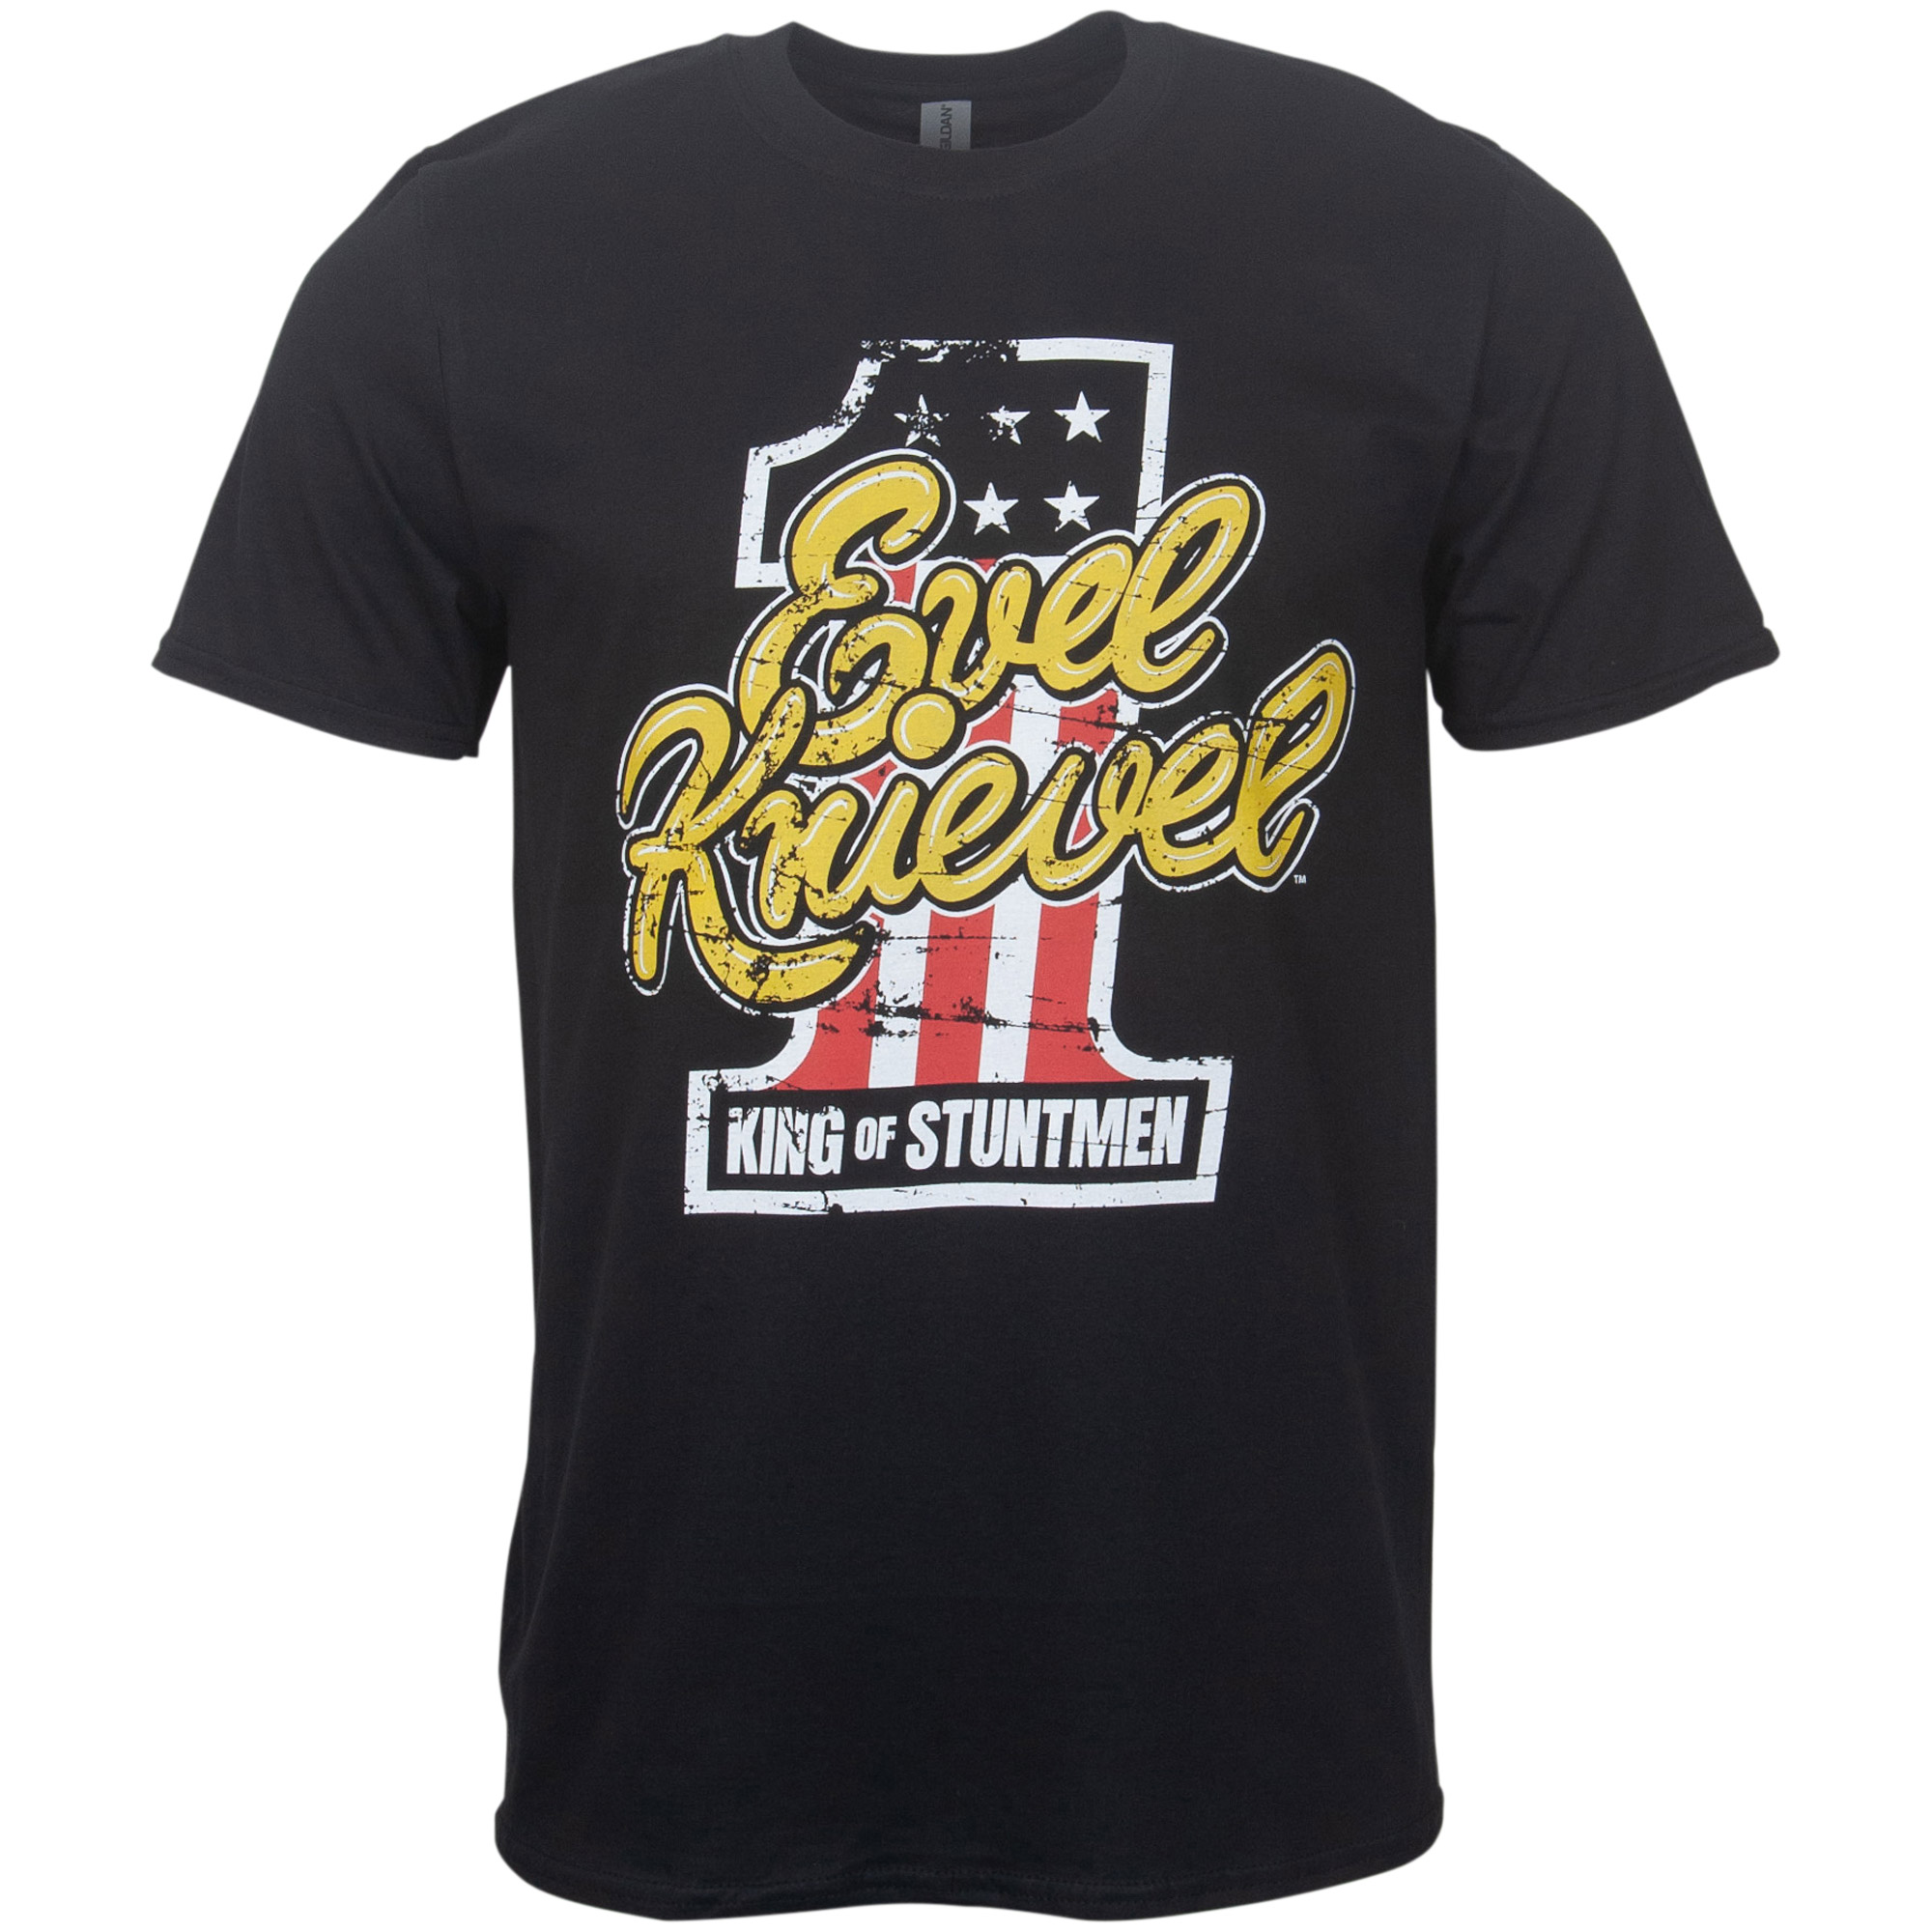 Evel Knievel T-Shirt "King of Stuntmen" - schwarz